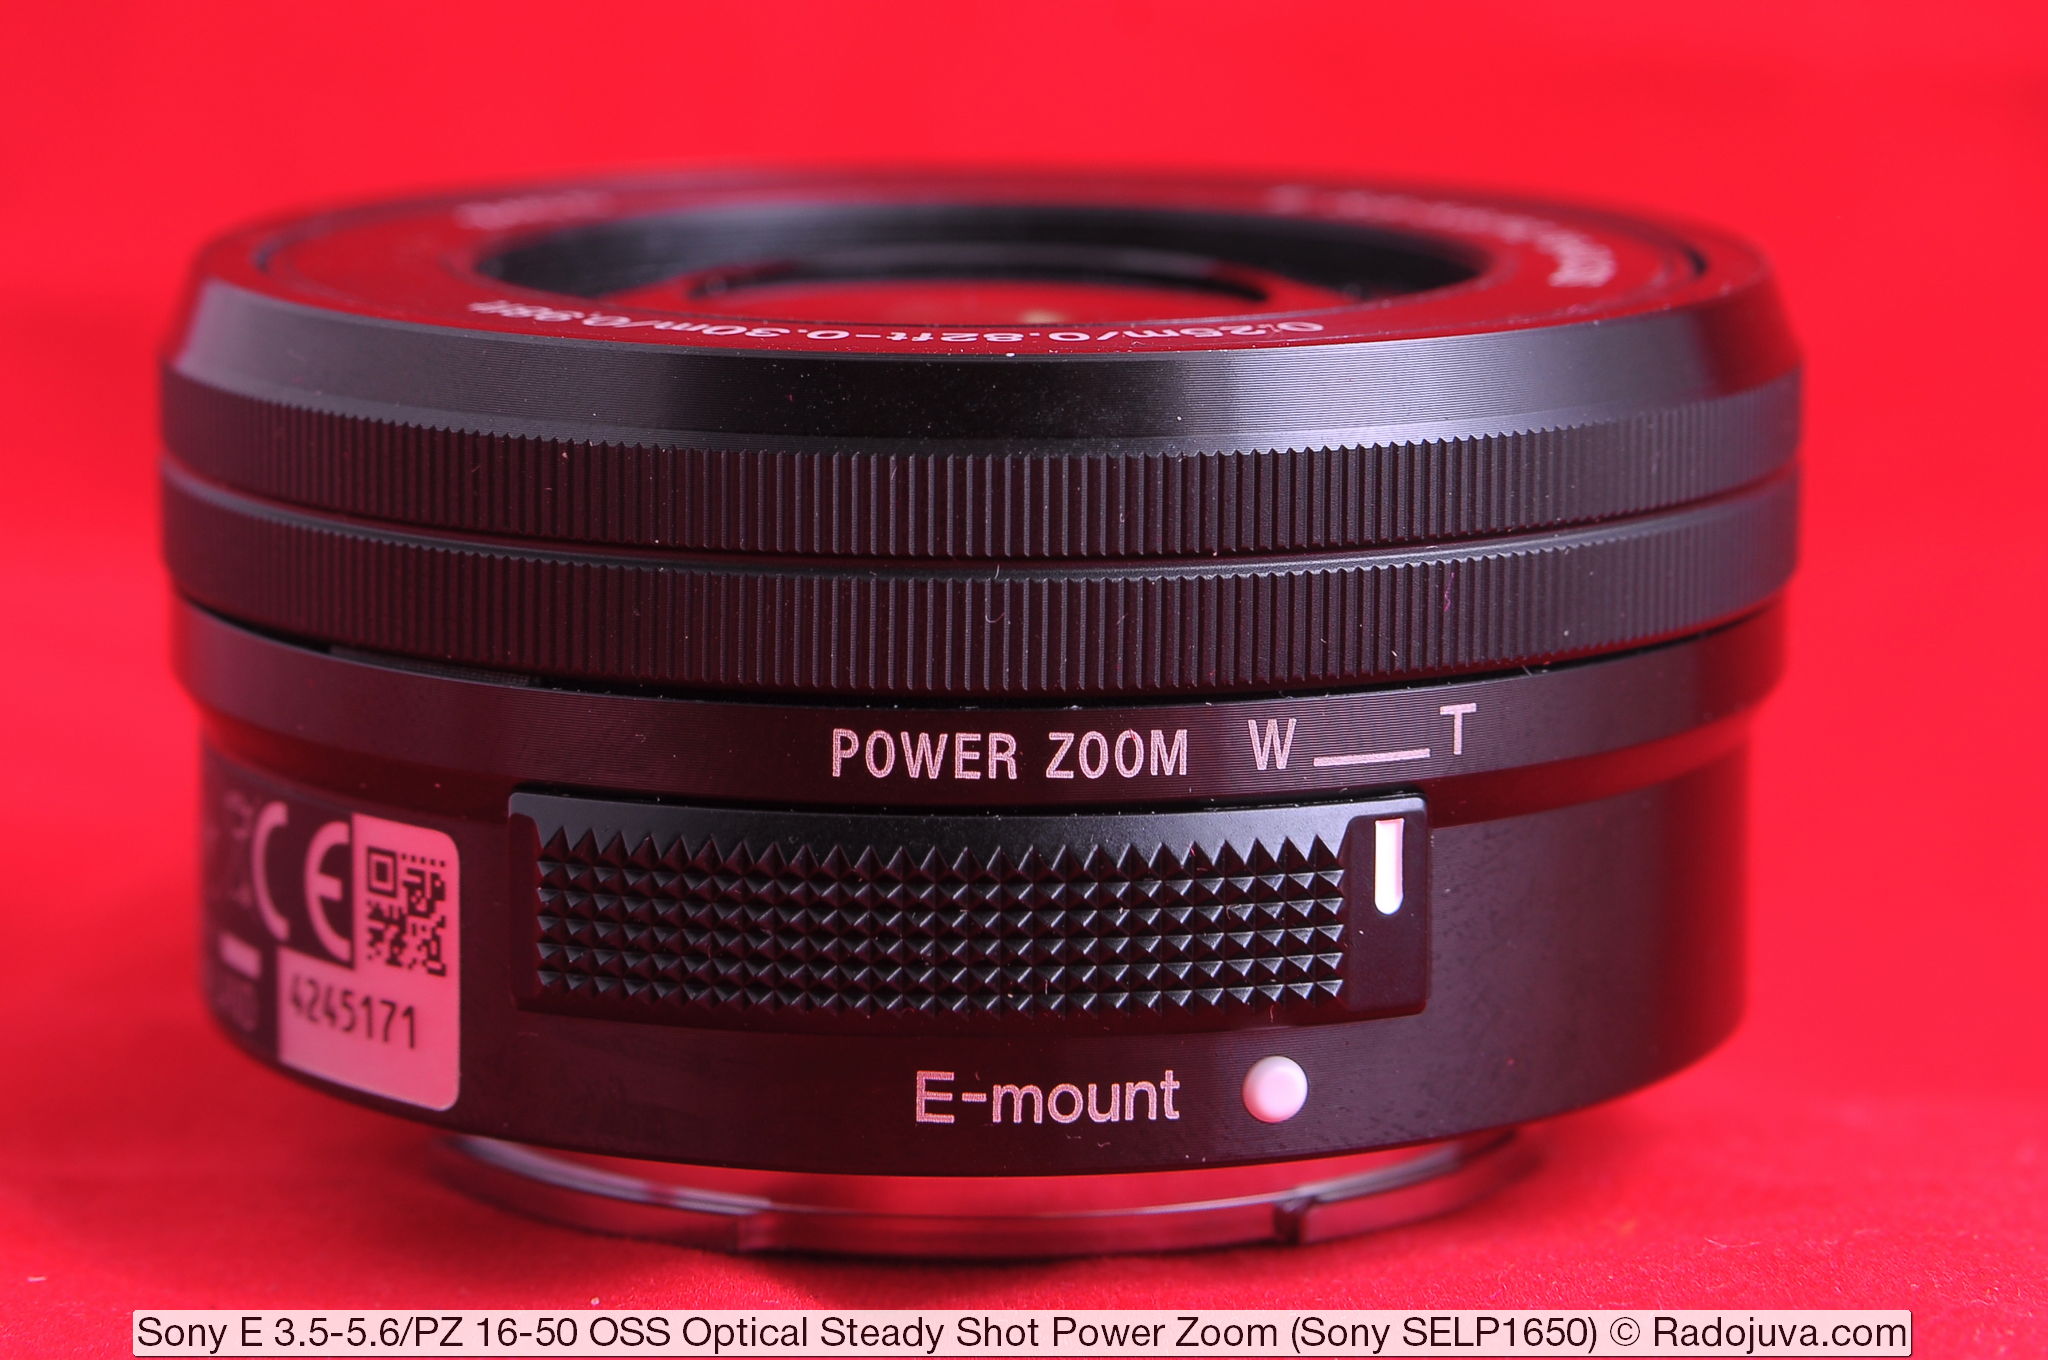 Sony E 3.5-5.6 / PZ 16-50 OSS Optical Steady Shot Power Zoom (Sony SELP1650)